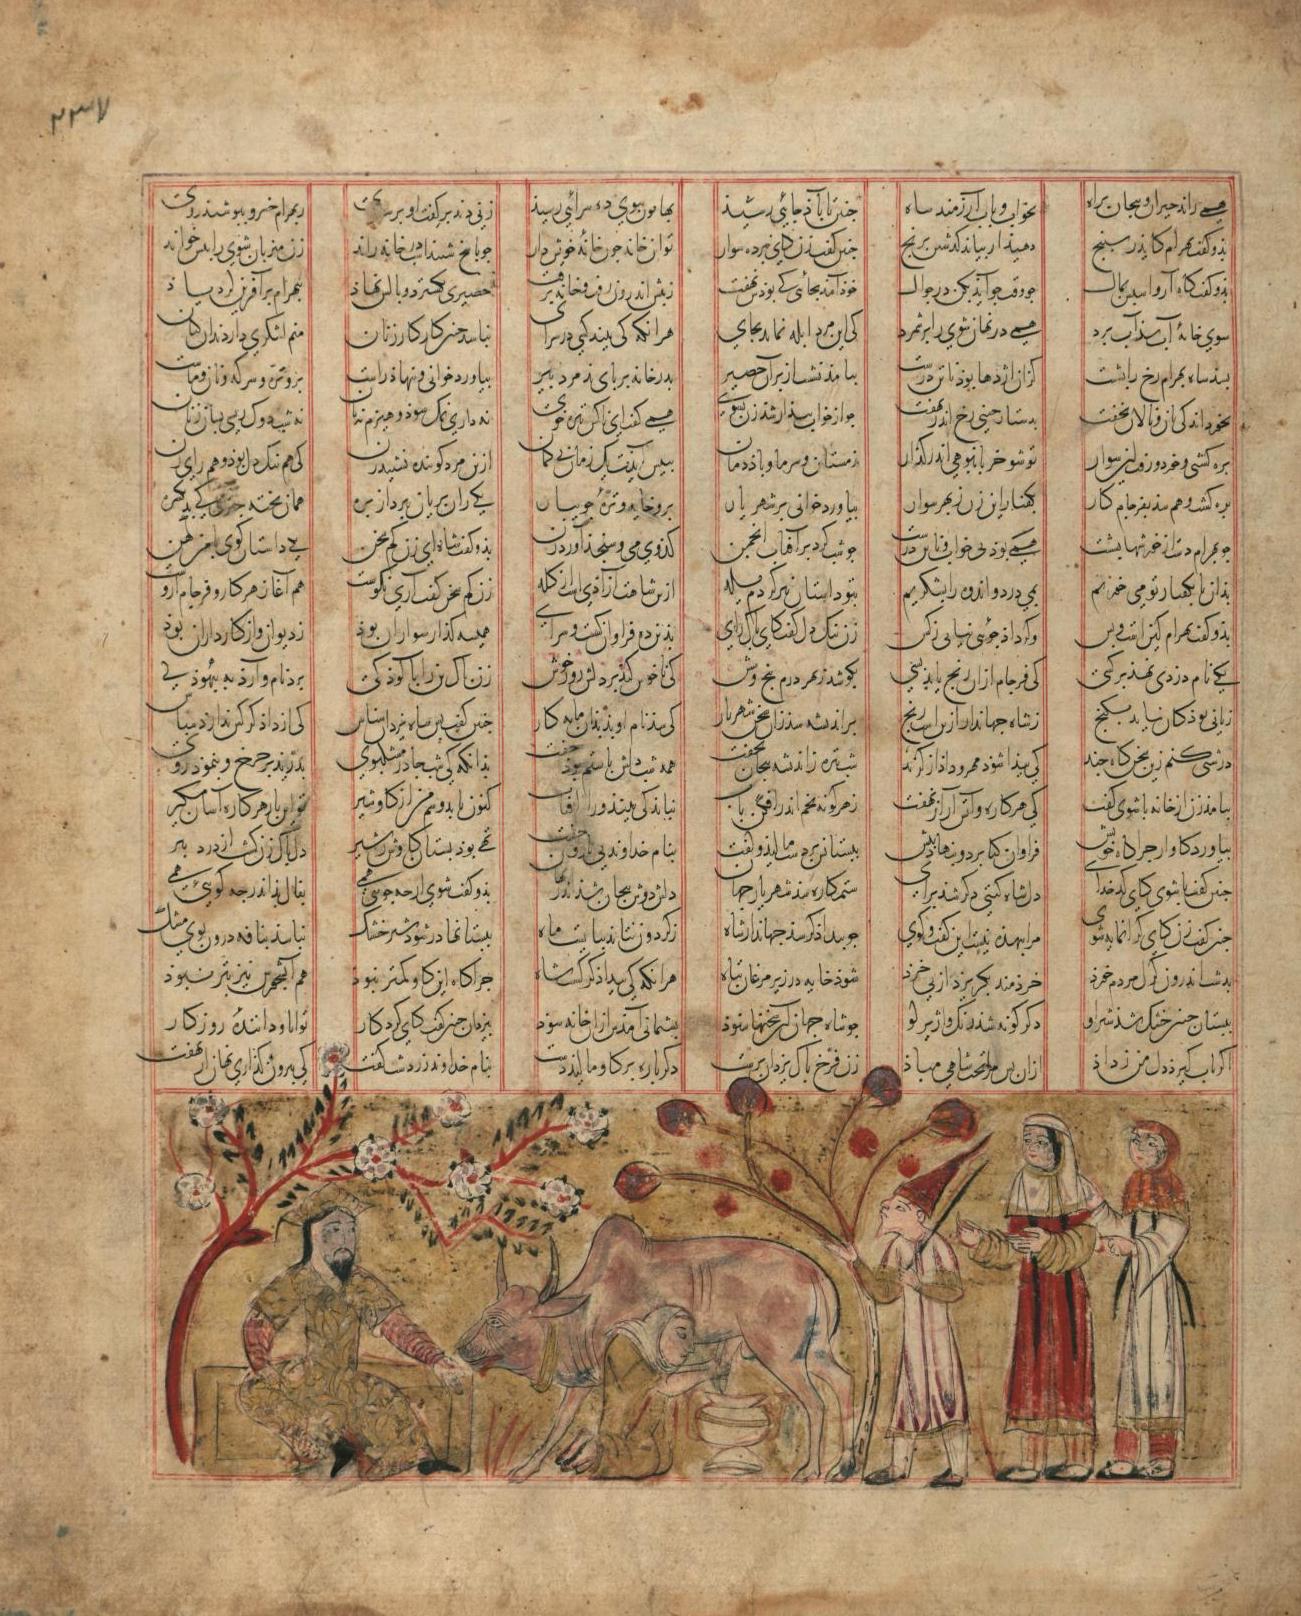 Hasan ibn Muhammad ibn 'Ali al-Husayni (scribe) and Inju Shiraz (artist), "Bahram Gur in a Peasant’s House," Shahnama (Book of Kings), 1341, ink and pigments on light beige paper, 36.5 x 30.5 cm, Injuid Dynasty, Iran (Walters Art Museum)